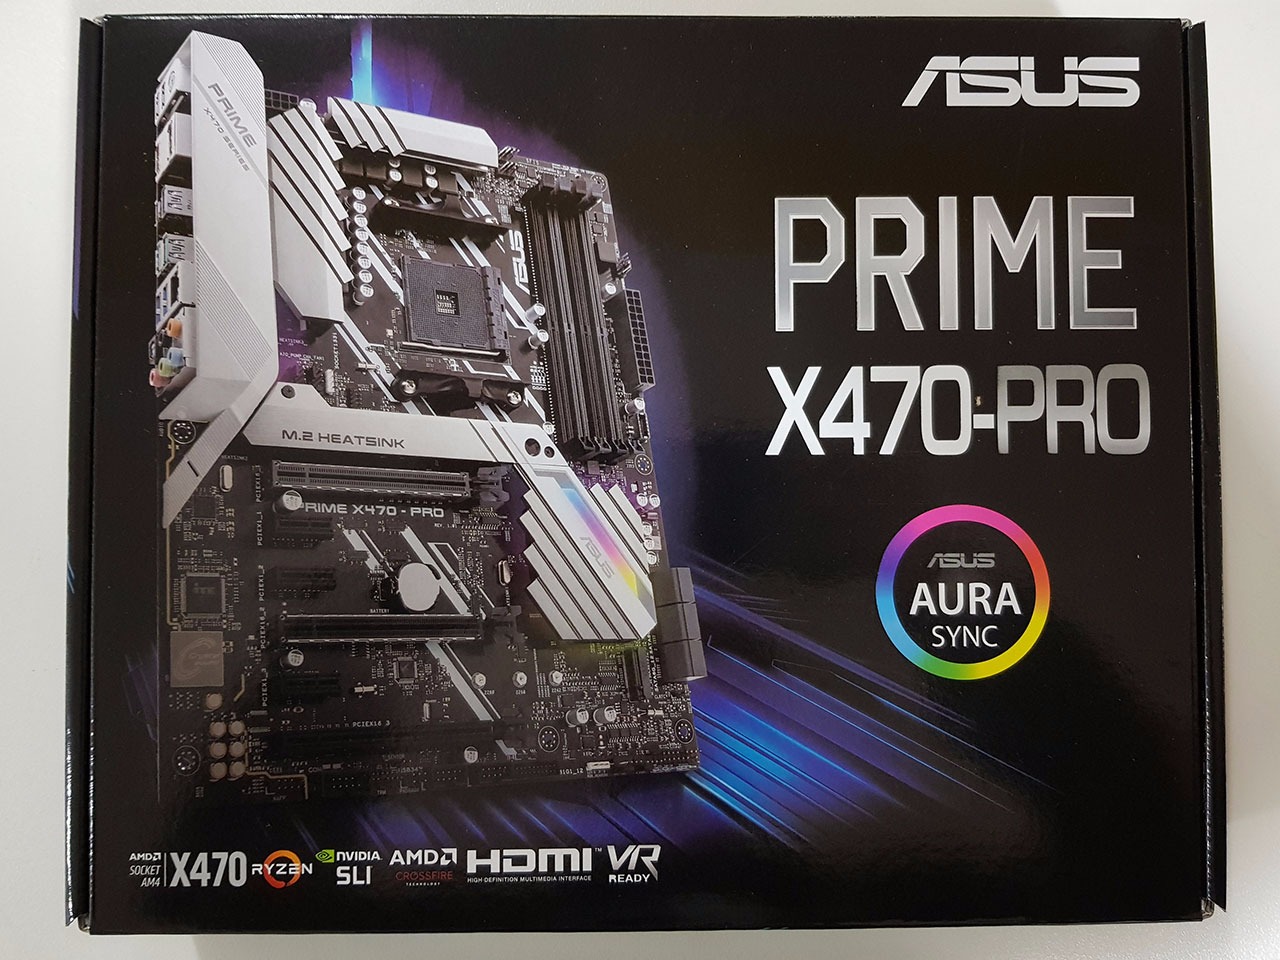 Prime x470-pro